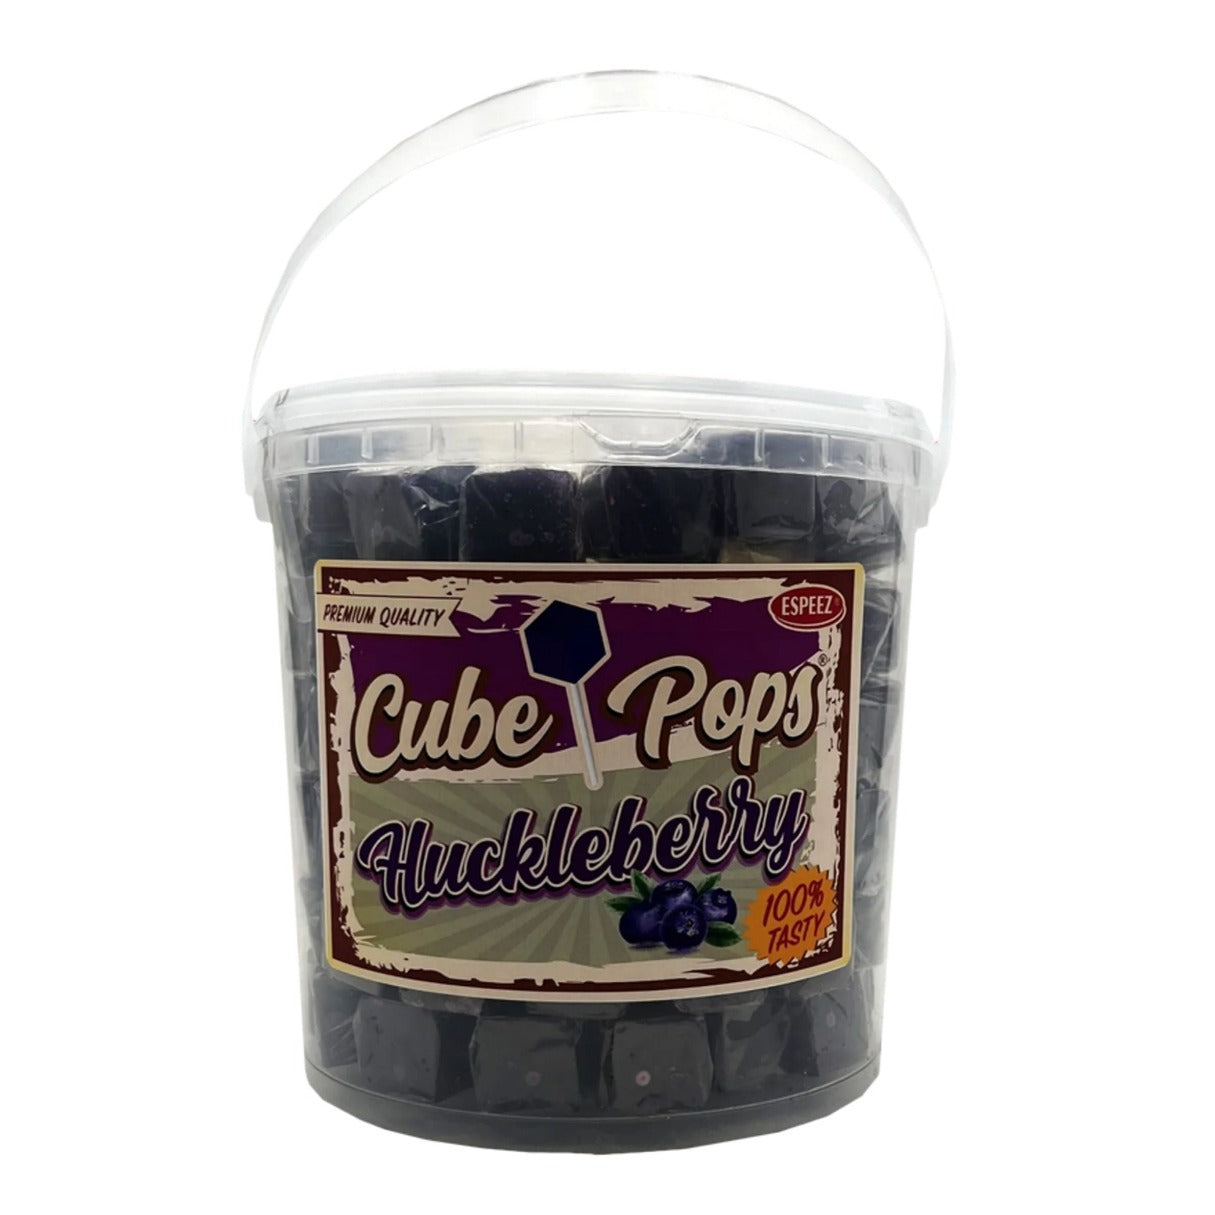 Espeez Huckleberry Cube Pop Jar - 100ct